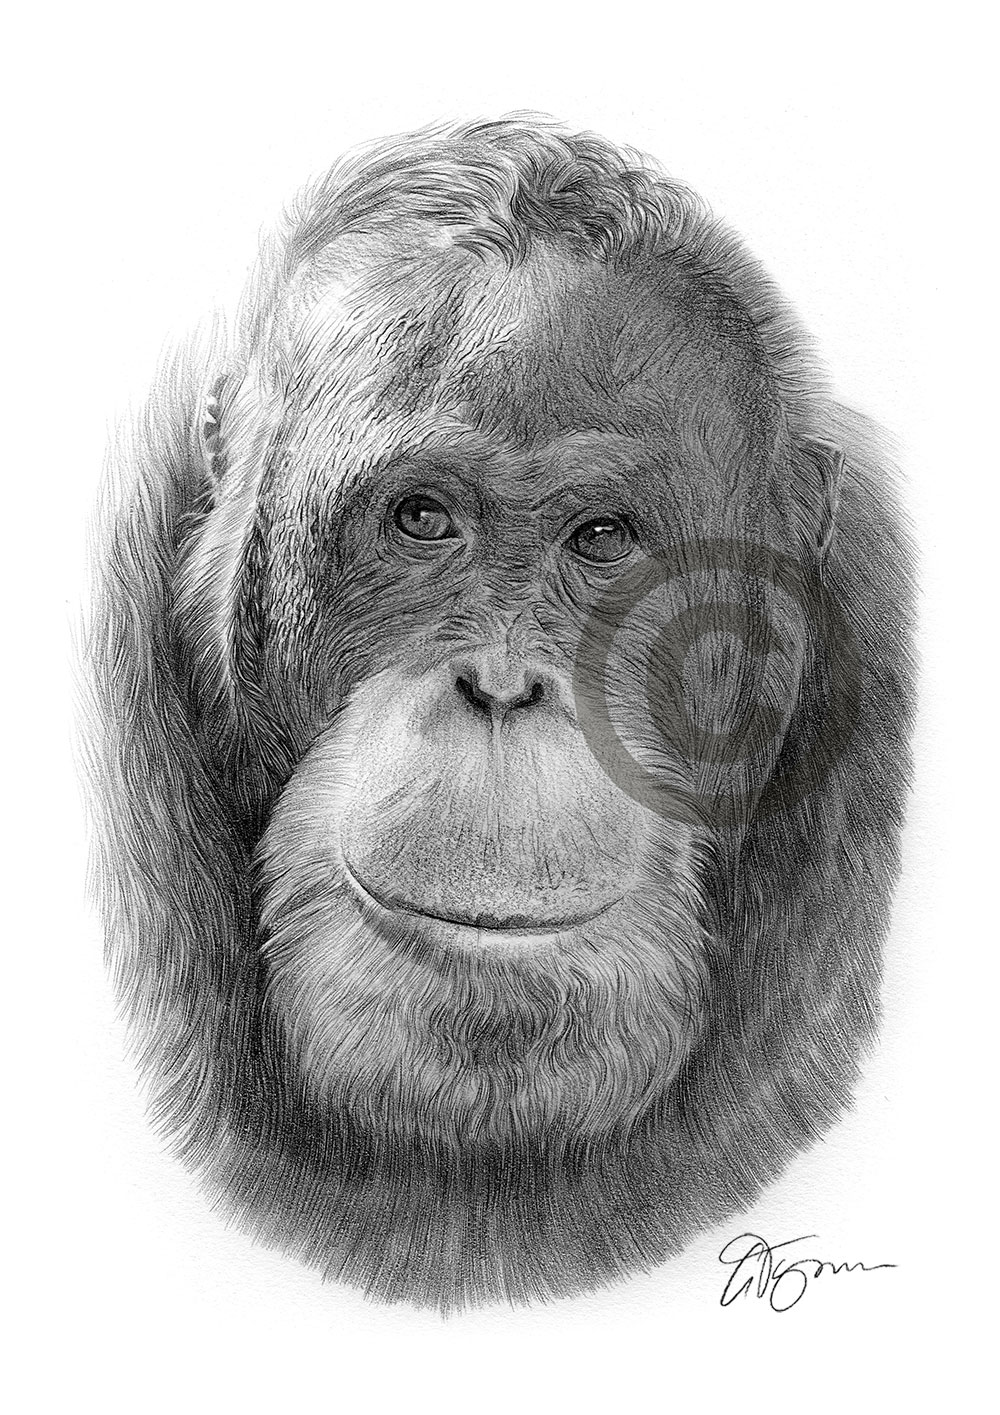 Pencil drawing of an orangutan by artist Gary Tymon